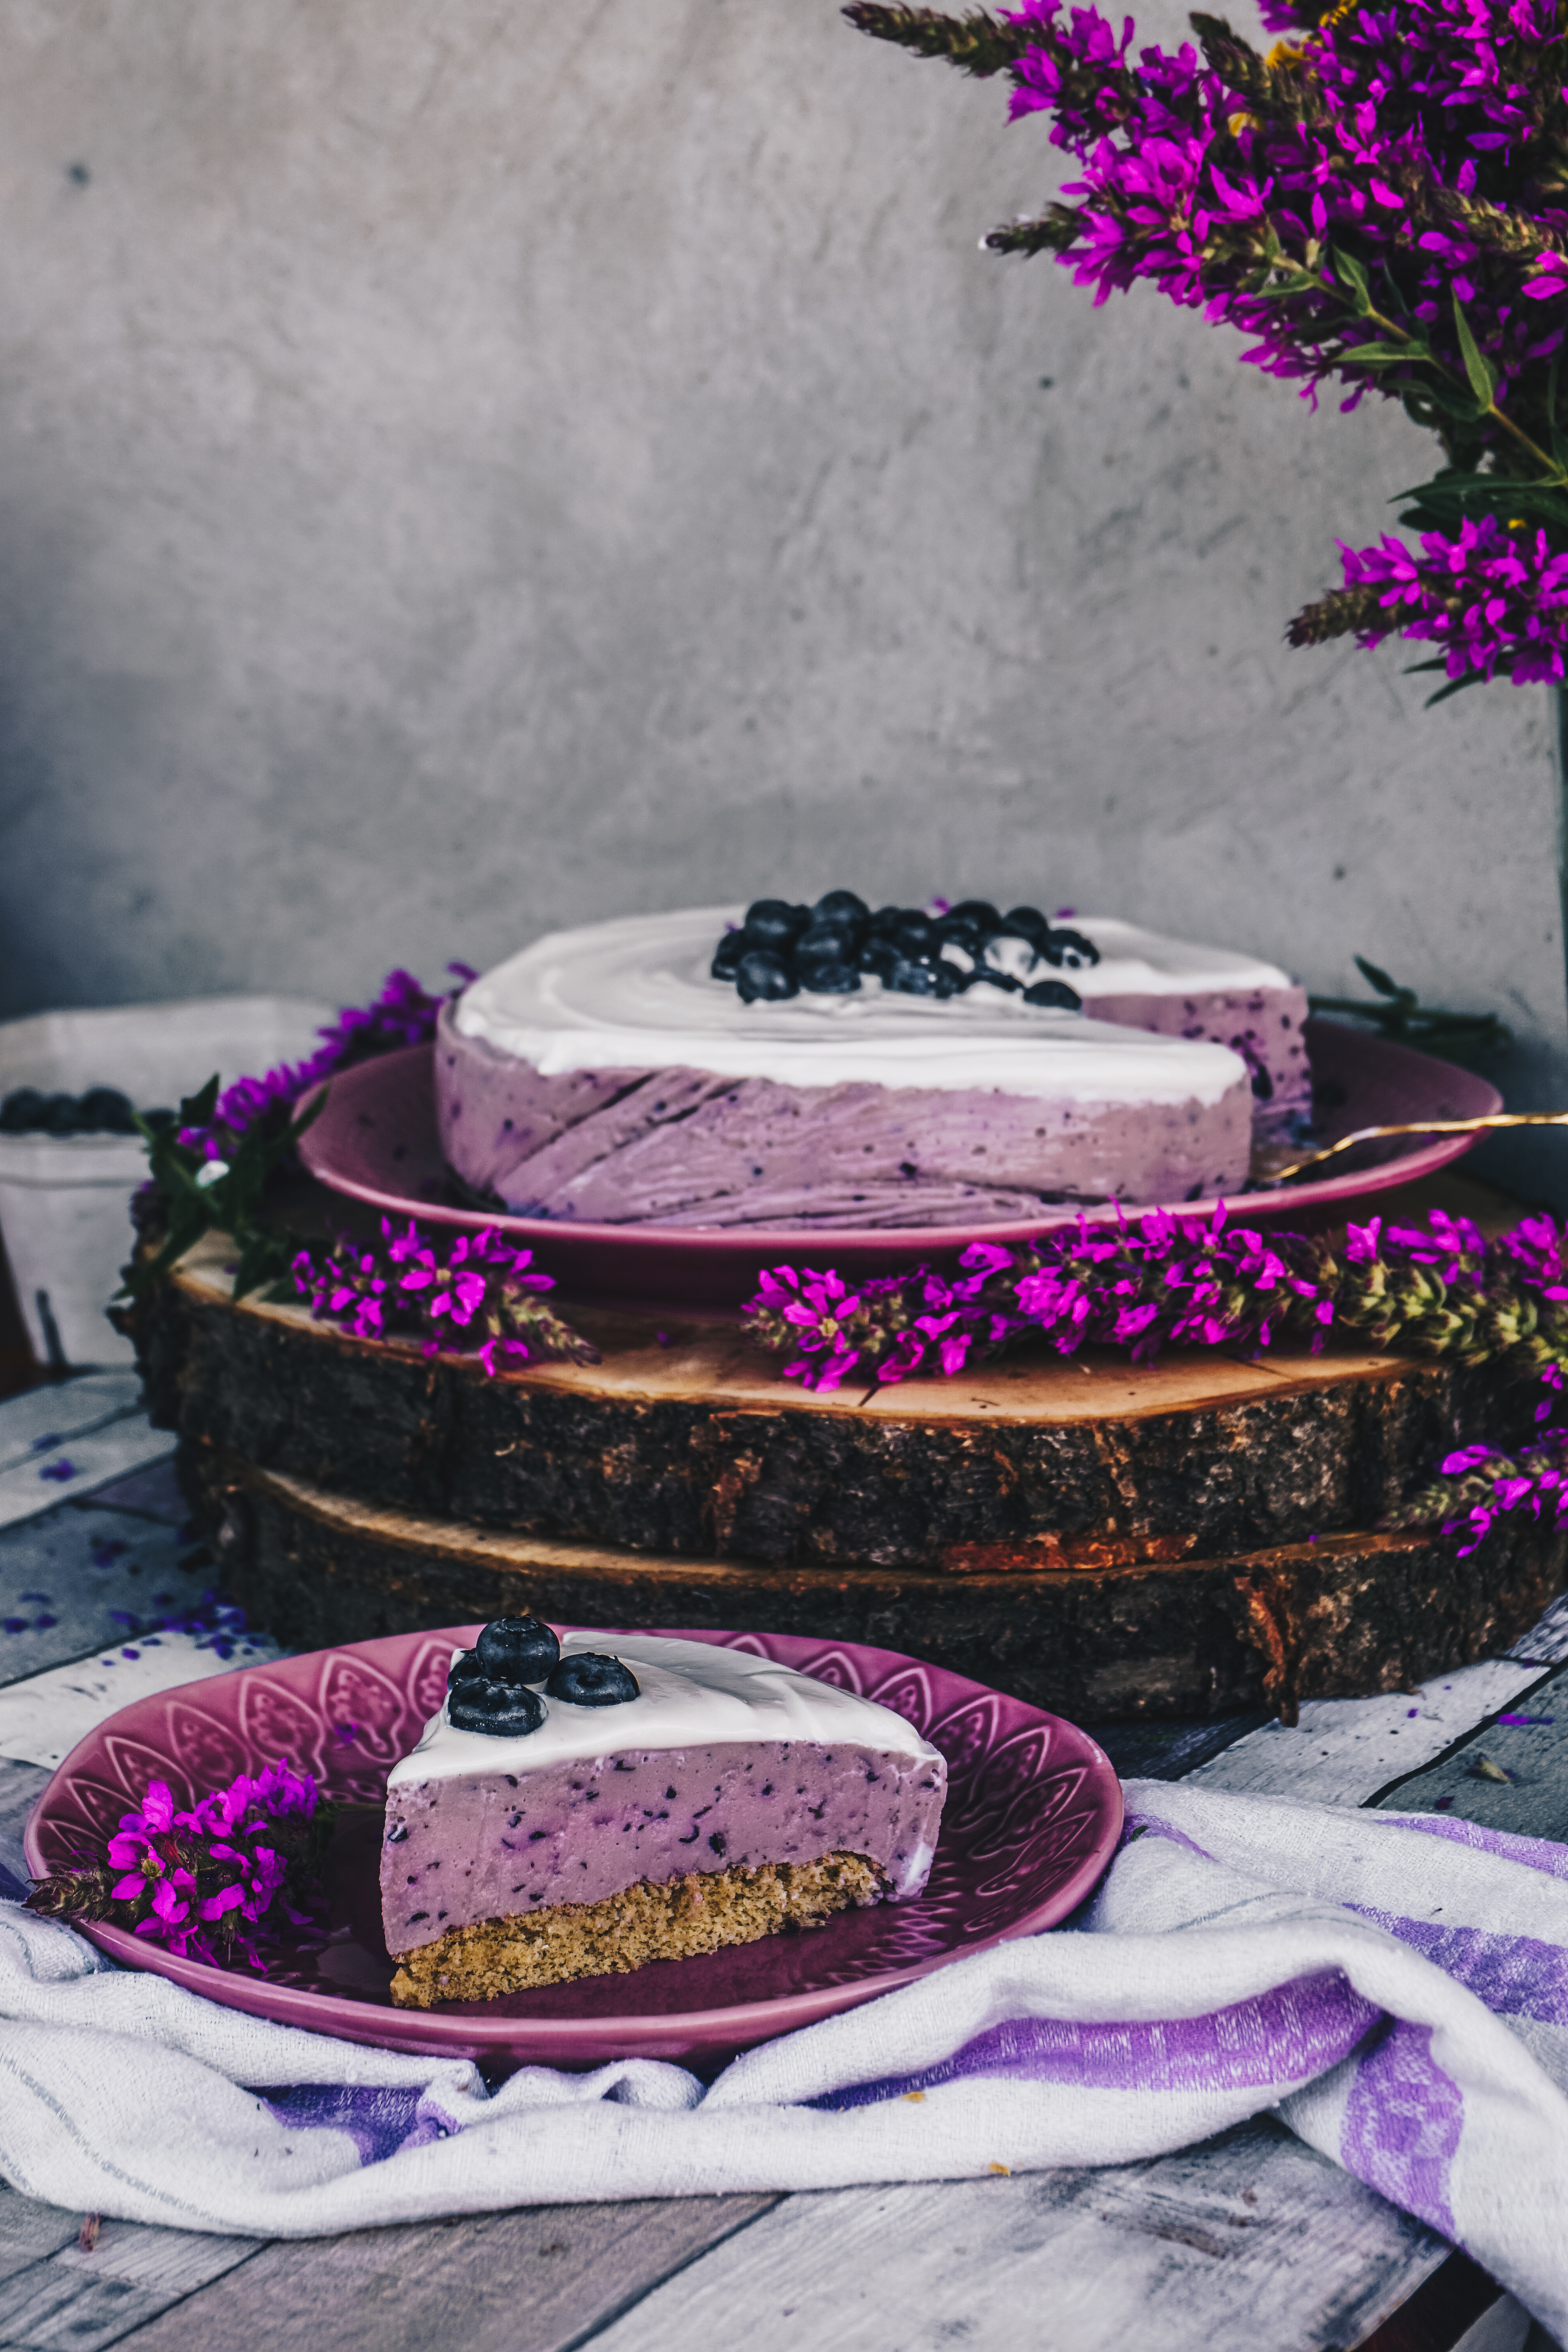 Healthy No Bake Blueberry Cheesecake